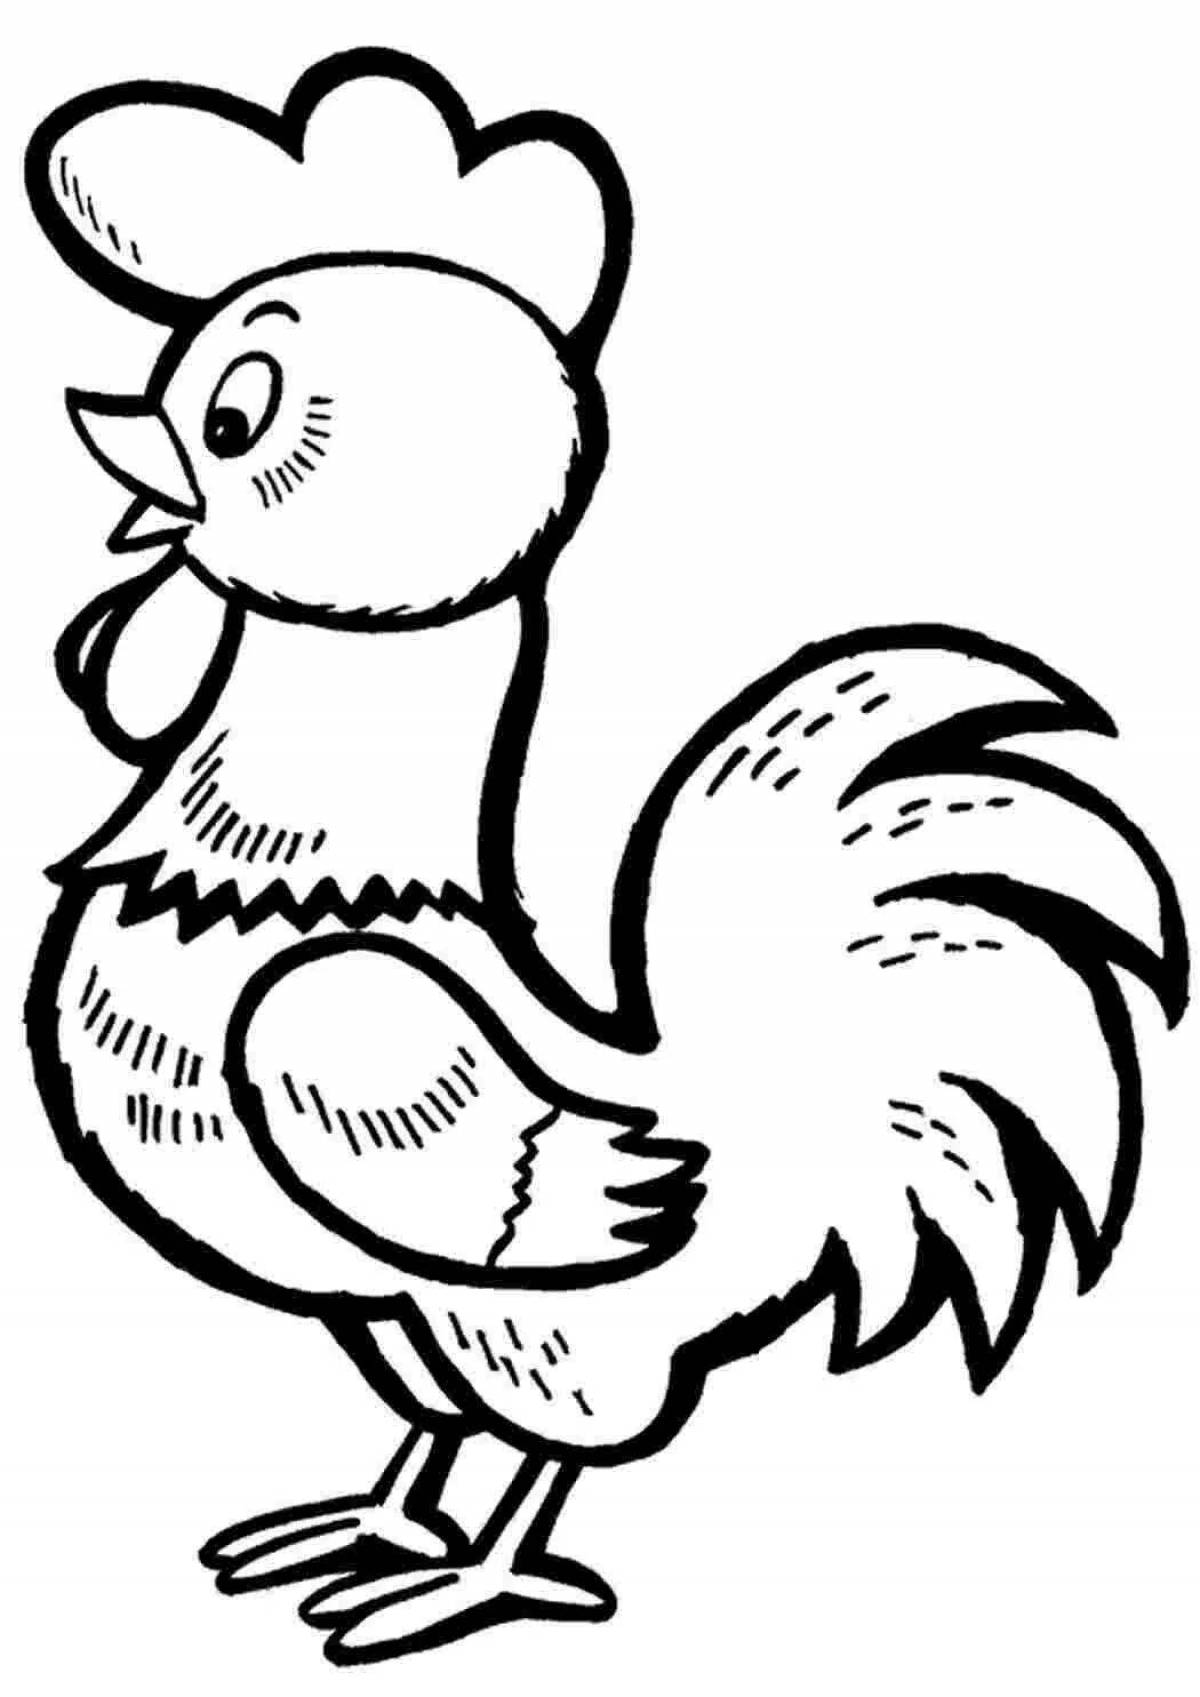 Serene cockerel drawing